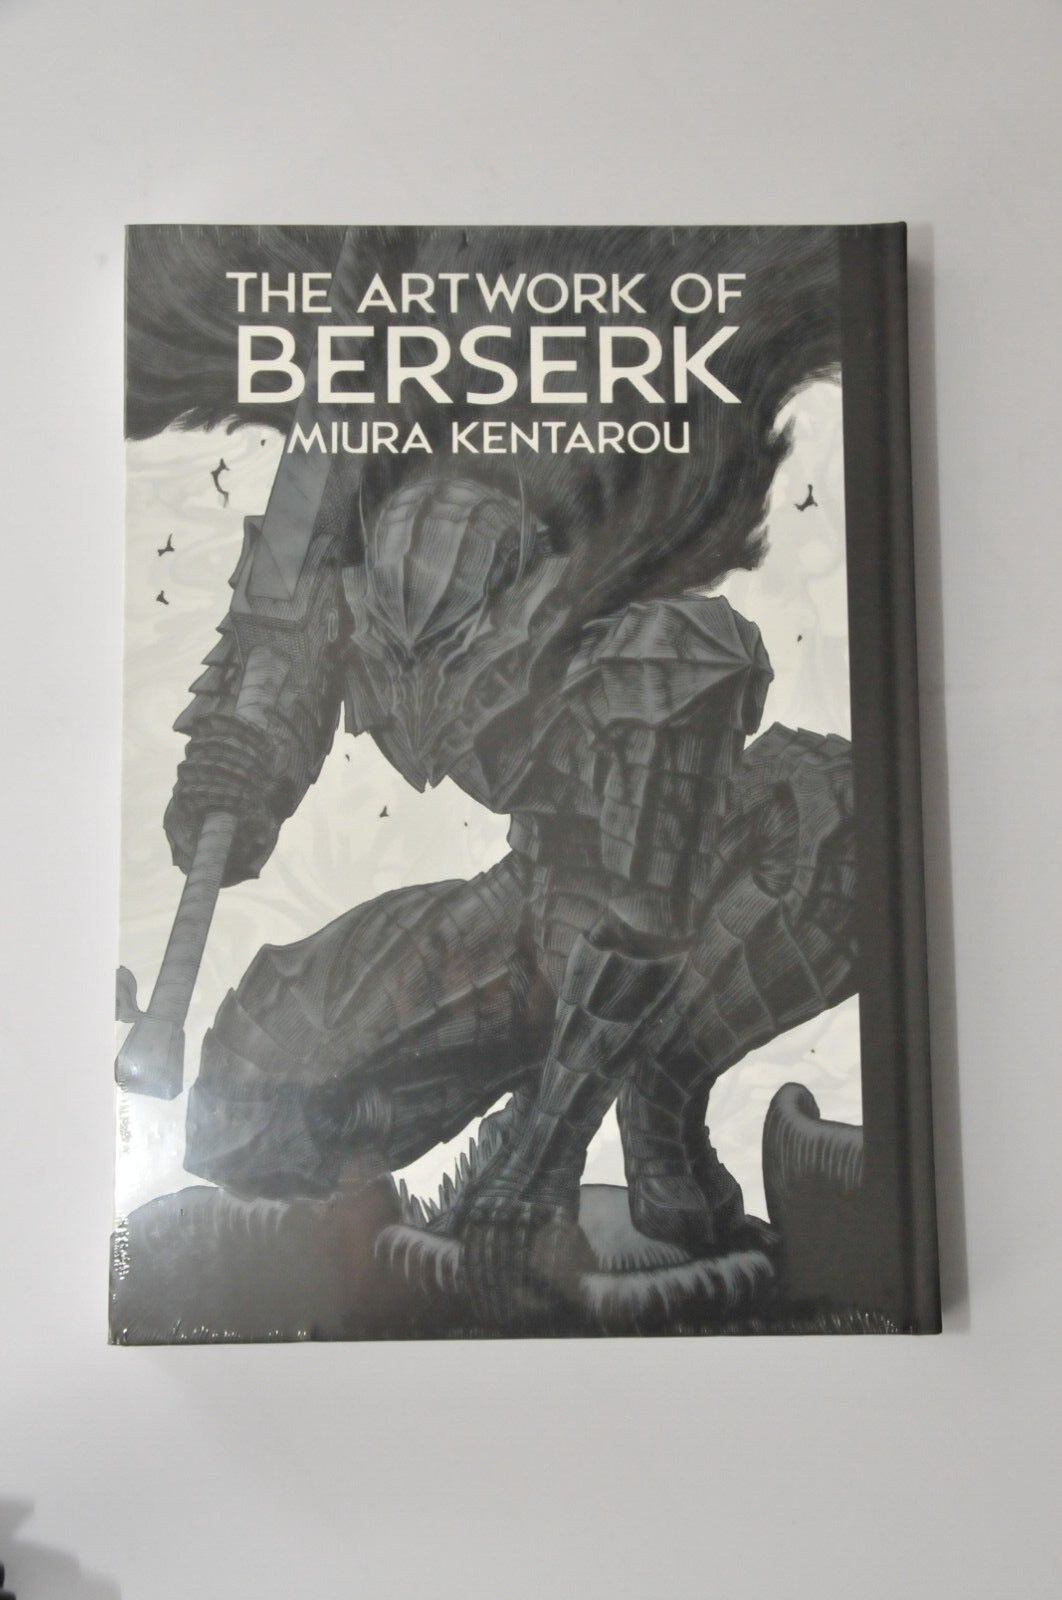 THE ARTWORK OF BERSERK BY MIURA KENTAROU OFFICIAL LIMITED ARTBOOK